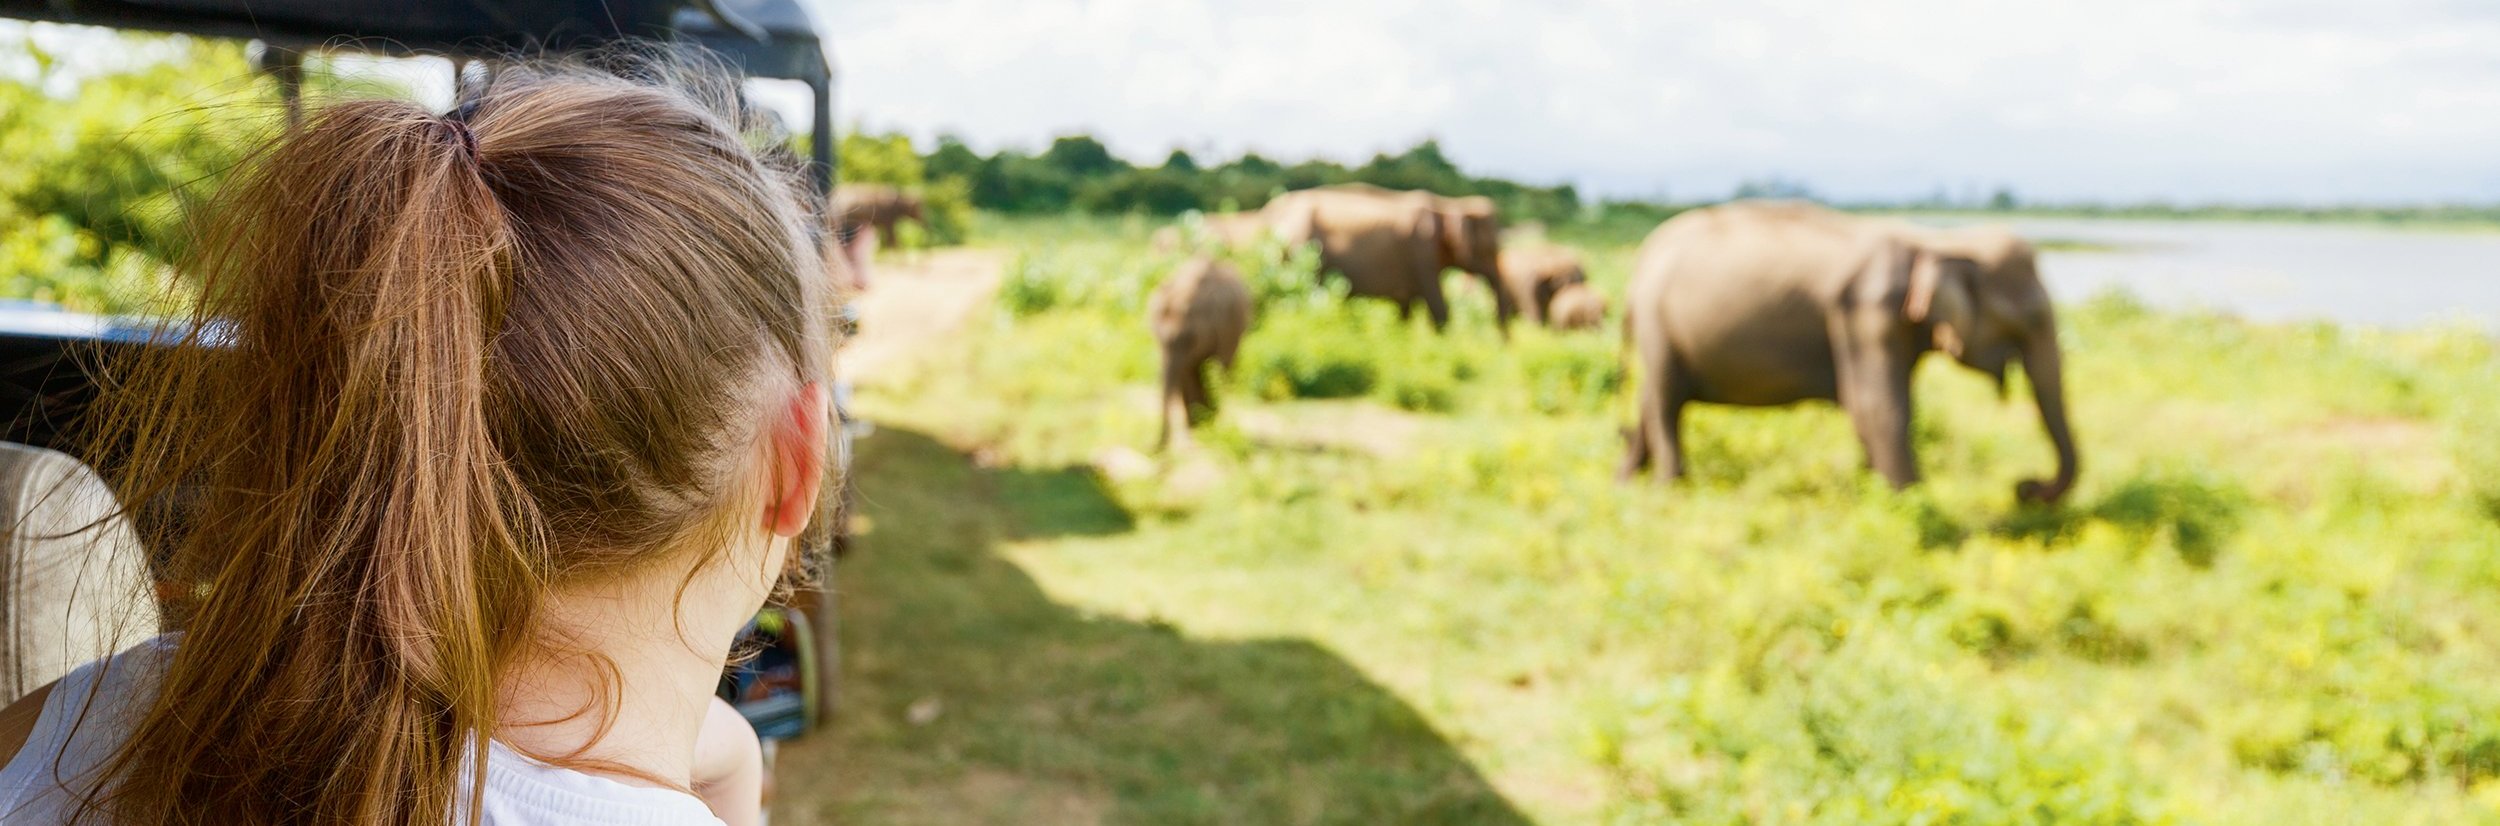 Sri Lanka Safari mit Kindern - Nationalparks in Sri Lanka mit Kindern - Kind beobachtet Elefanten